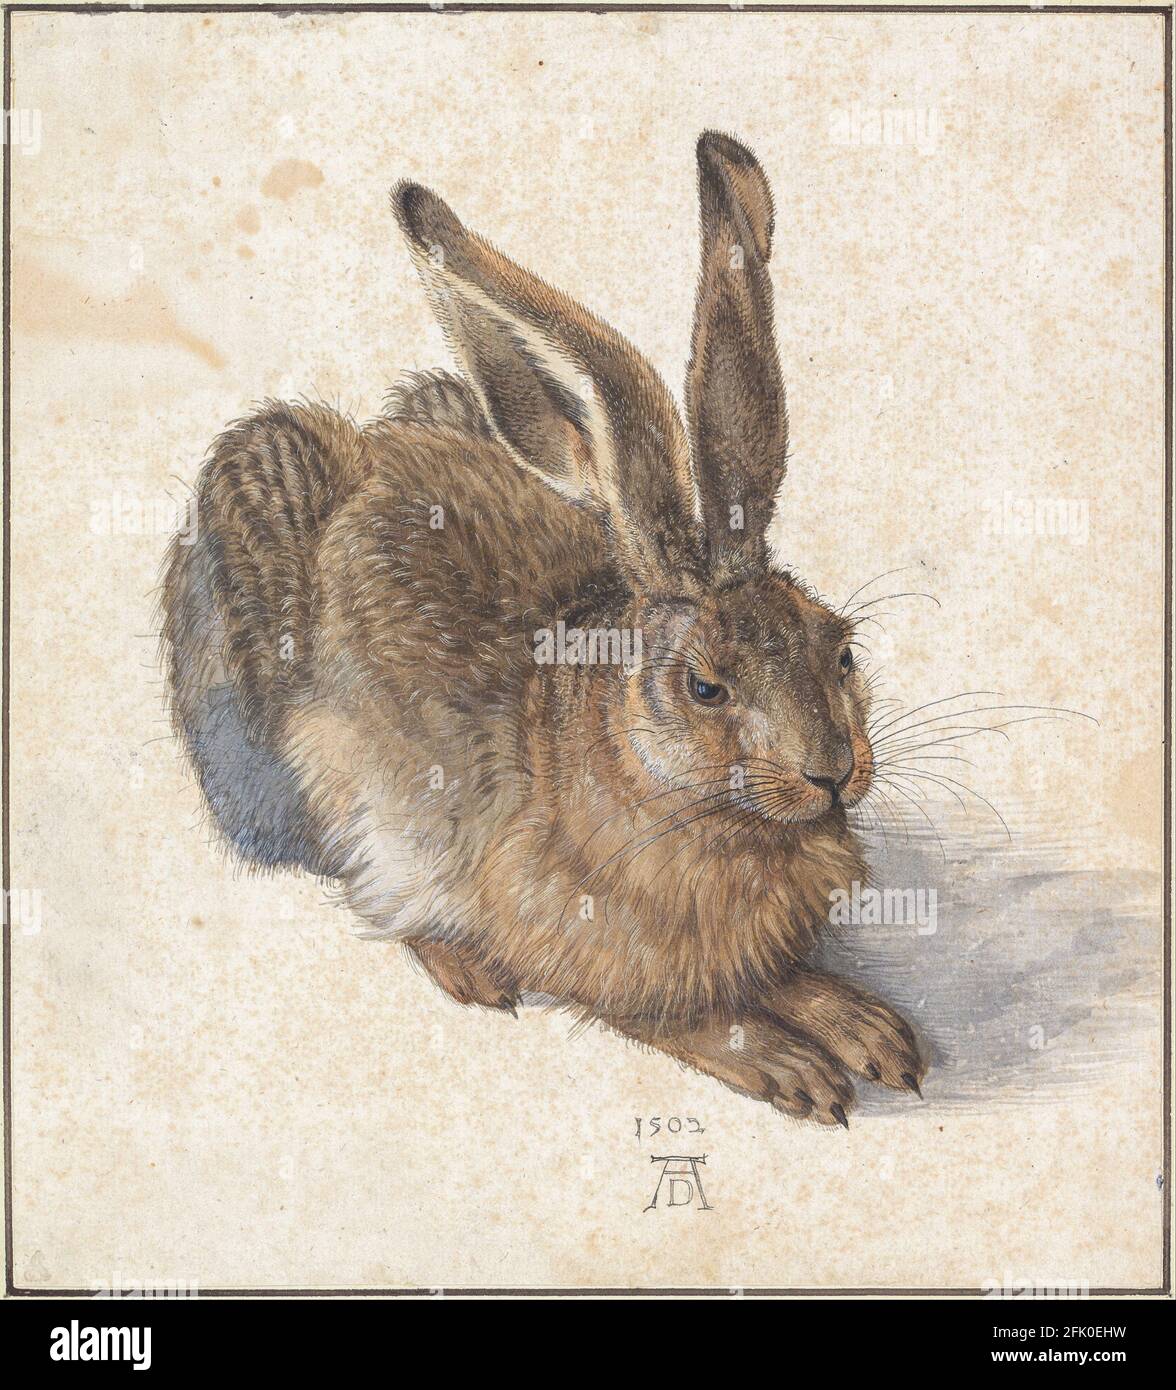 Albrecht Dürer, Young Hare, watercolor paint on paper, 1502, Albertina Museum, Vienna, Austria Stock Photo